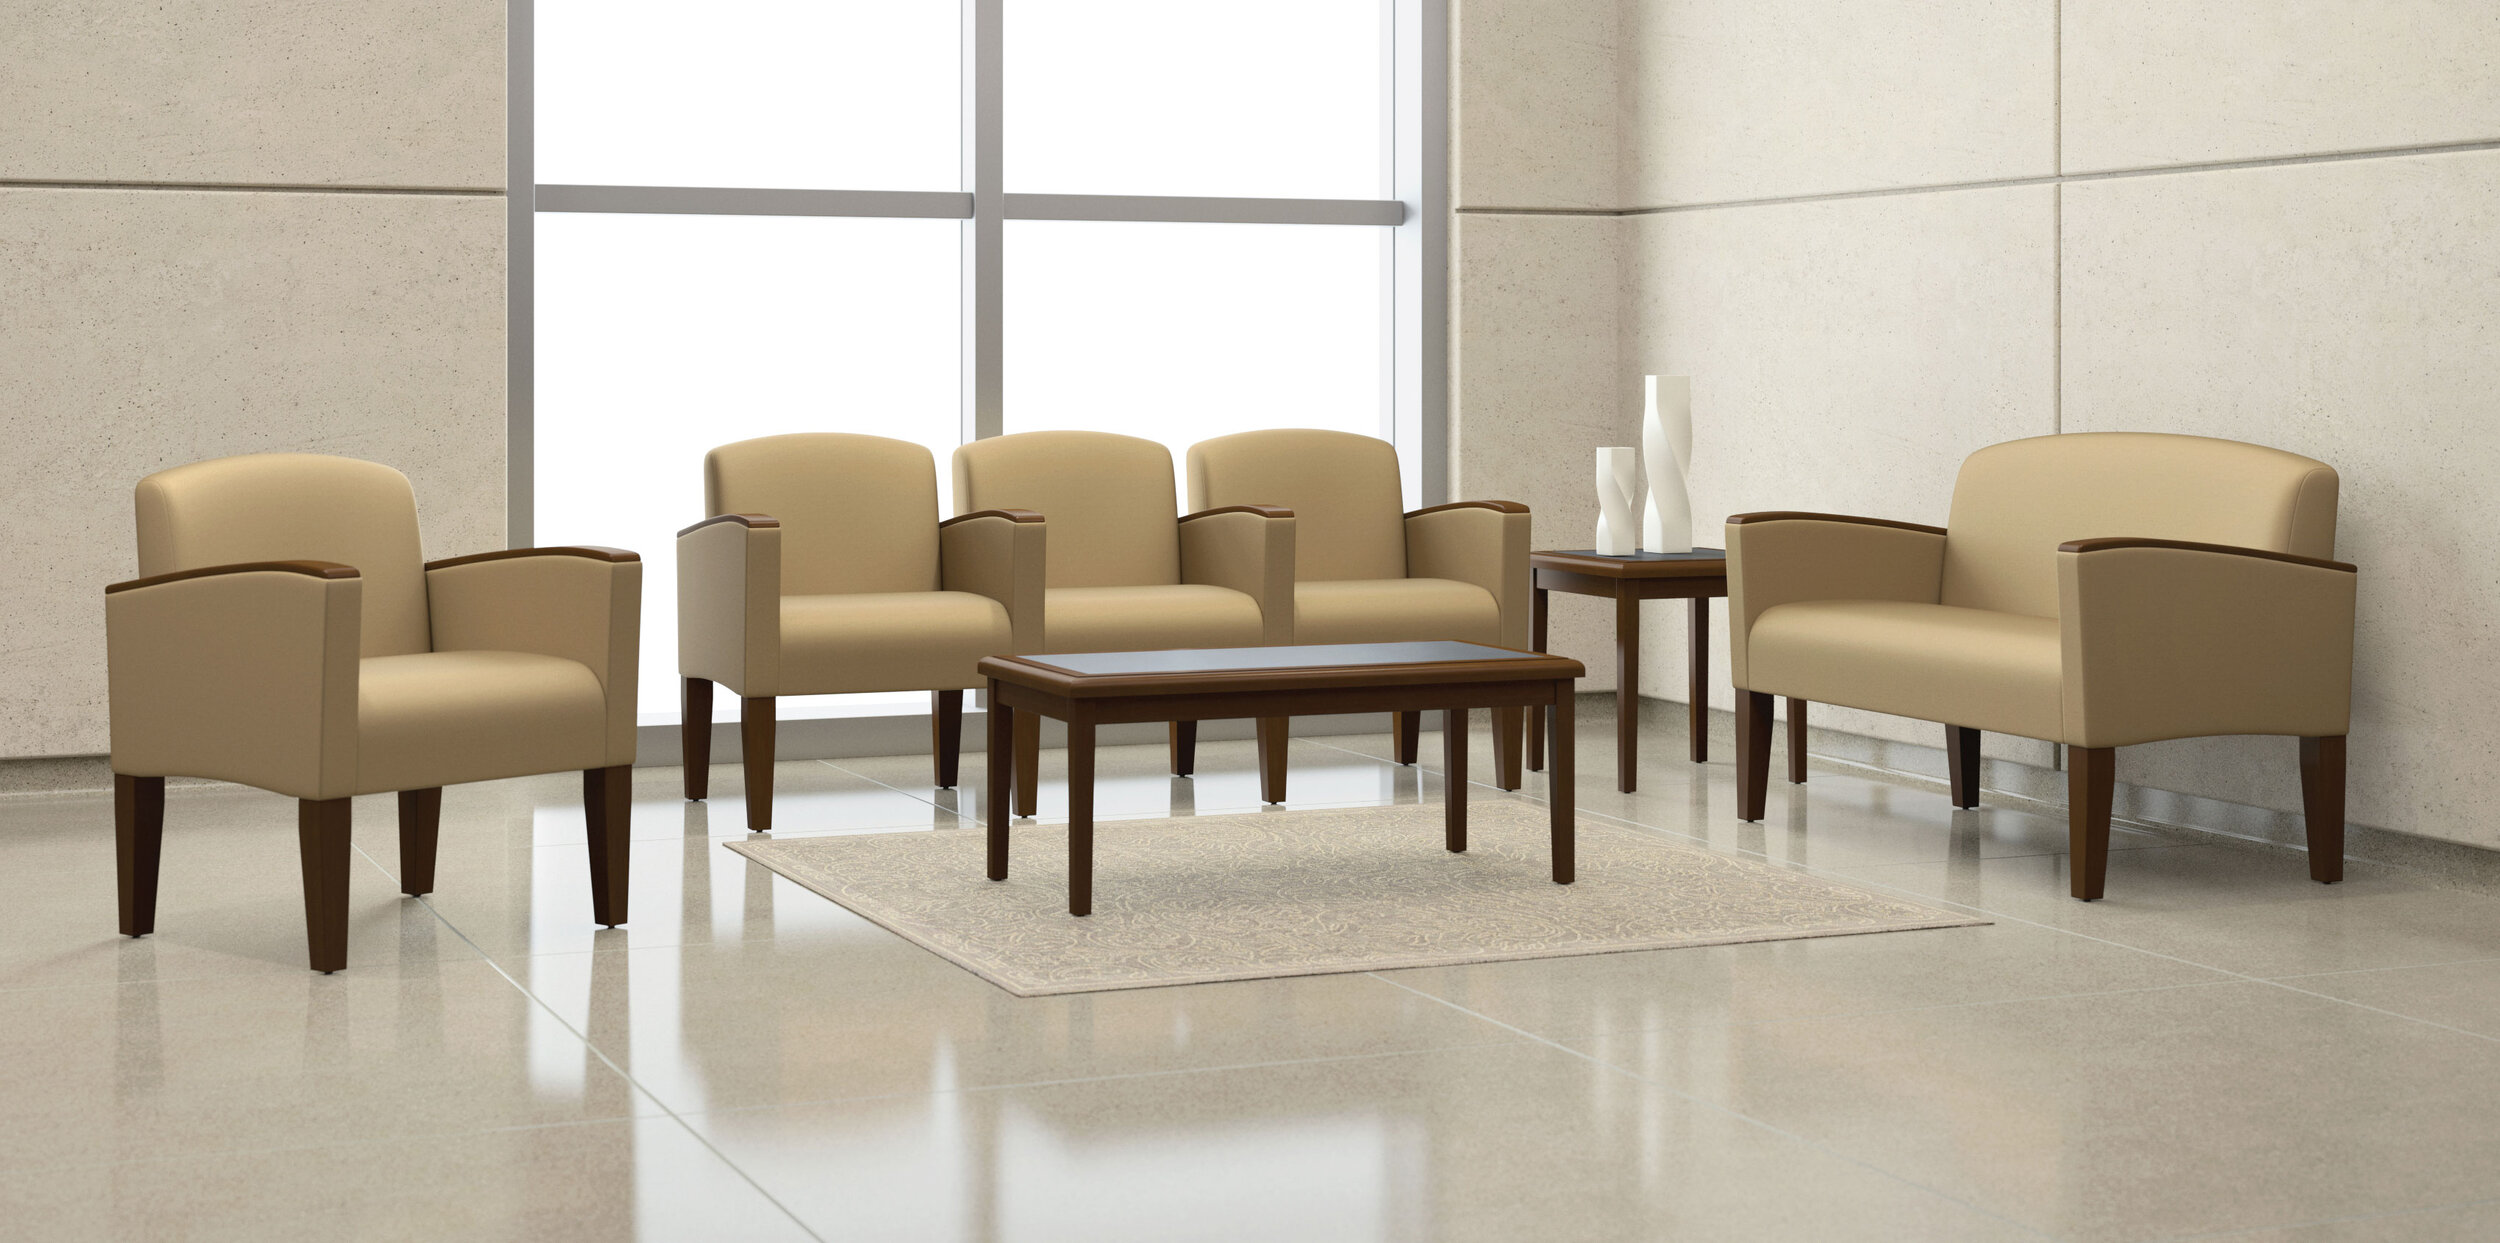 belmont-seating-group+USA Office Furniture.jpg